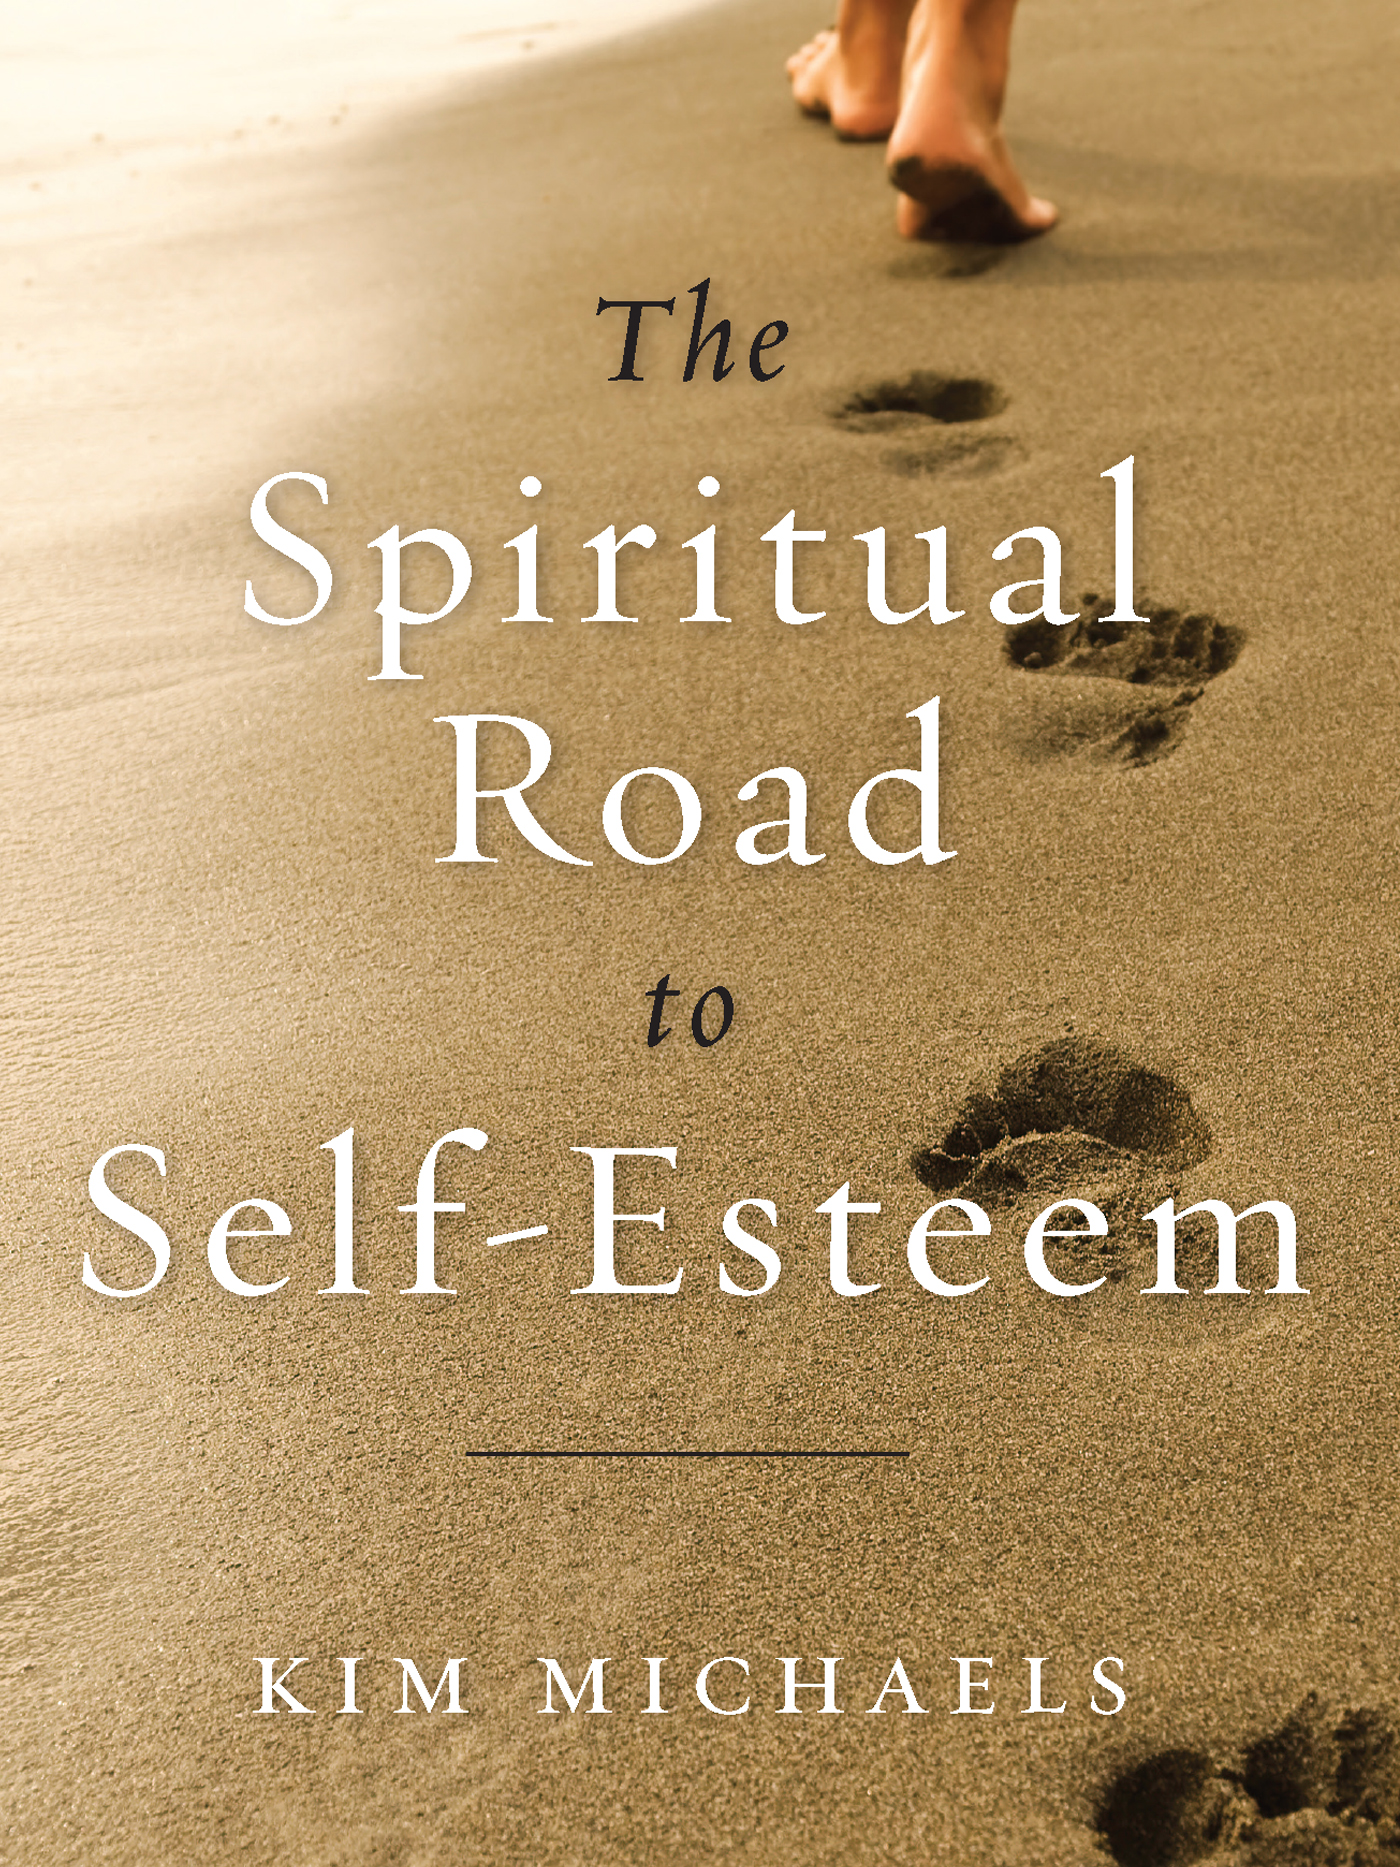 The Spiritual Road to Self - Esteem Kim Michaels Copyright 2013 Kim - photo 1